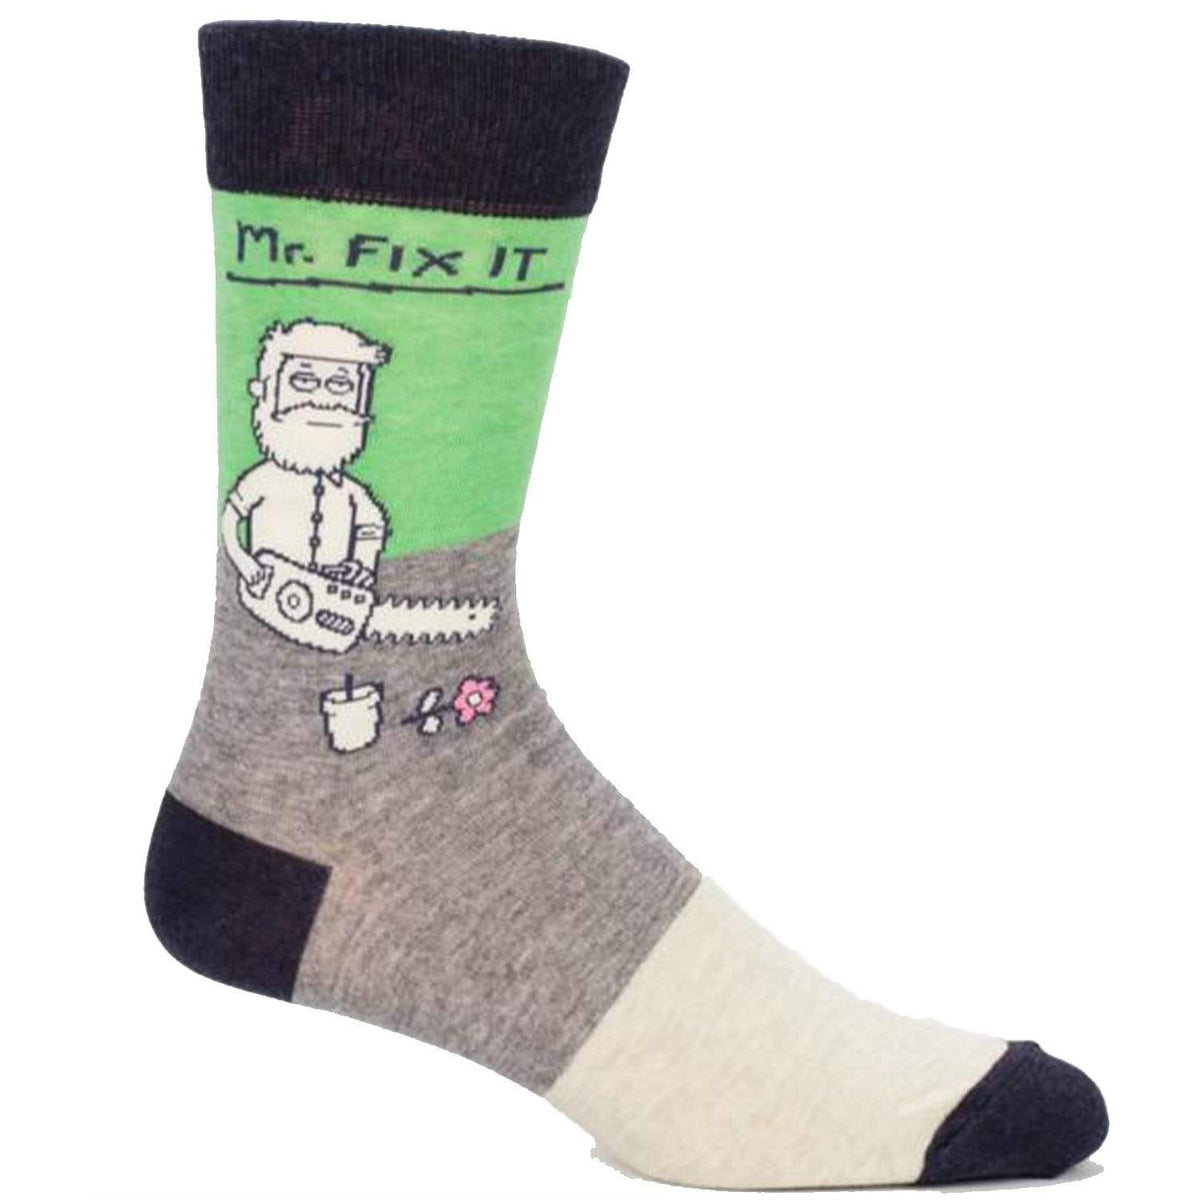 Mr. Fix It Socks Men’s Crew Sock gray